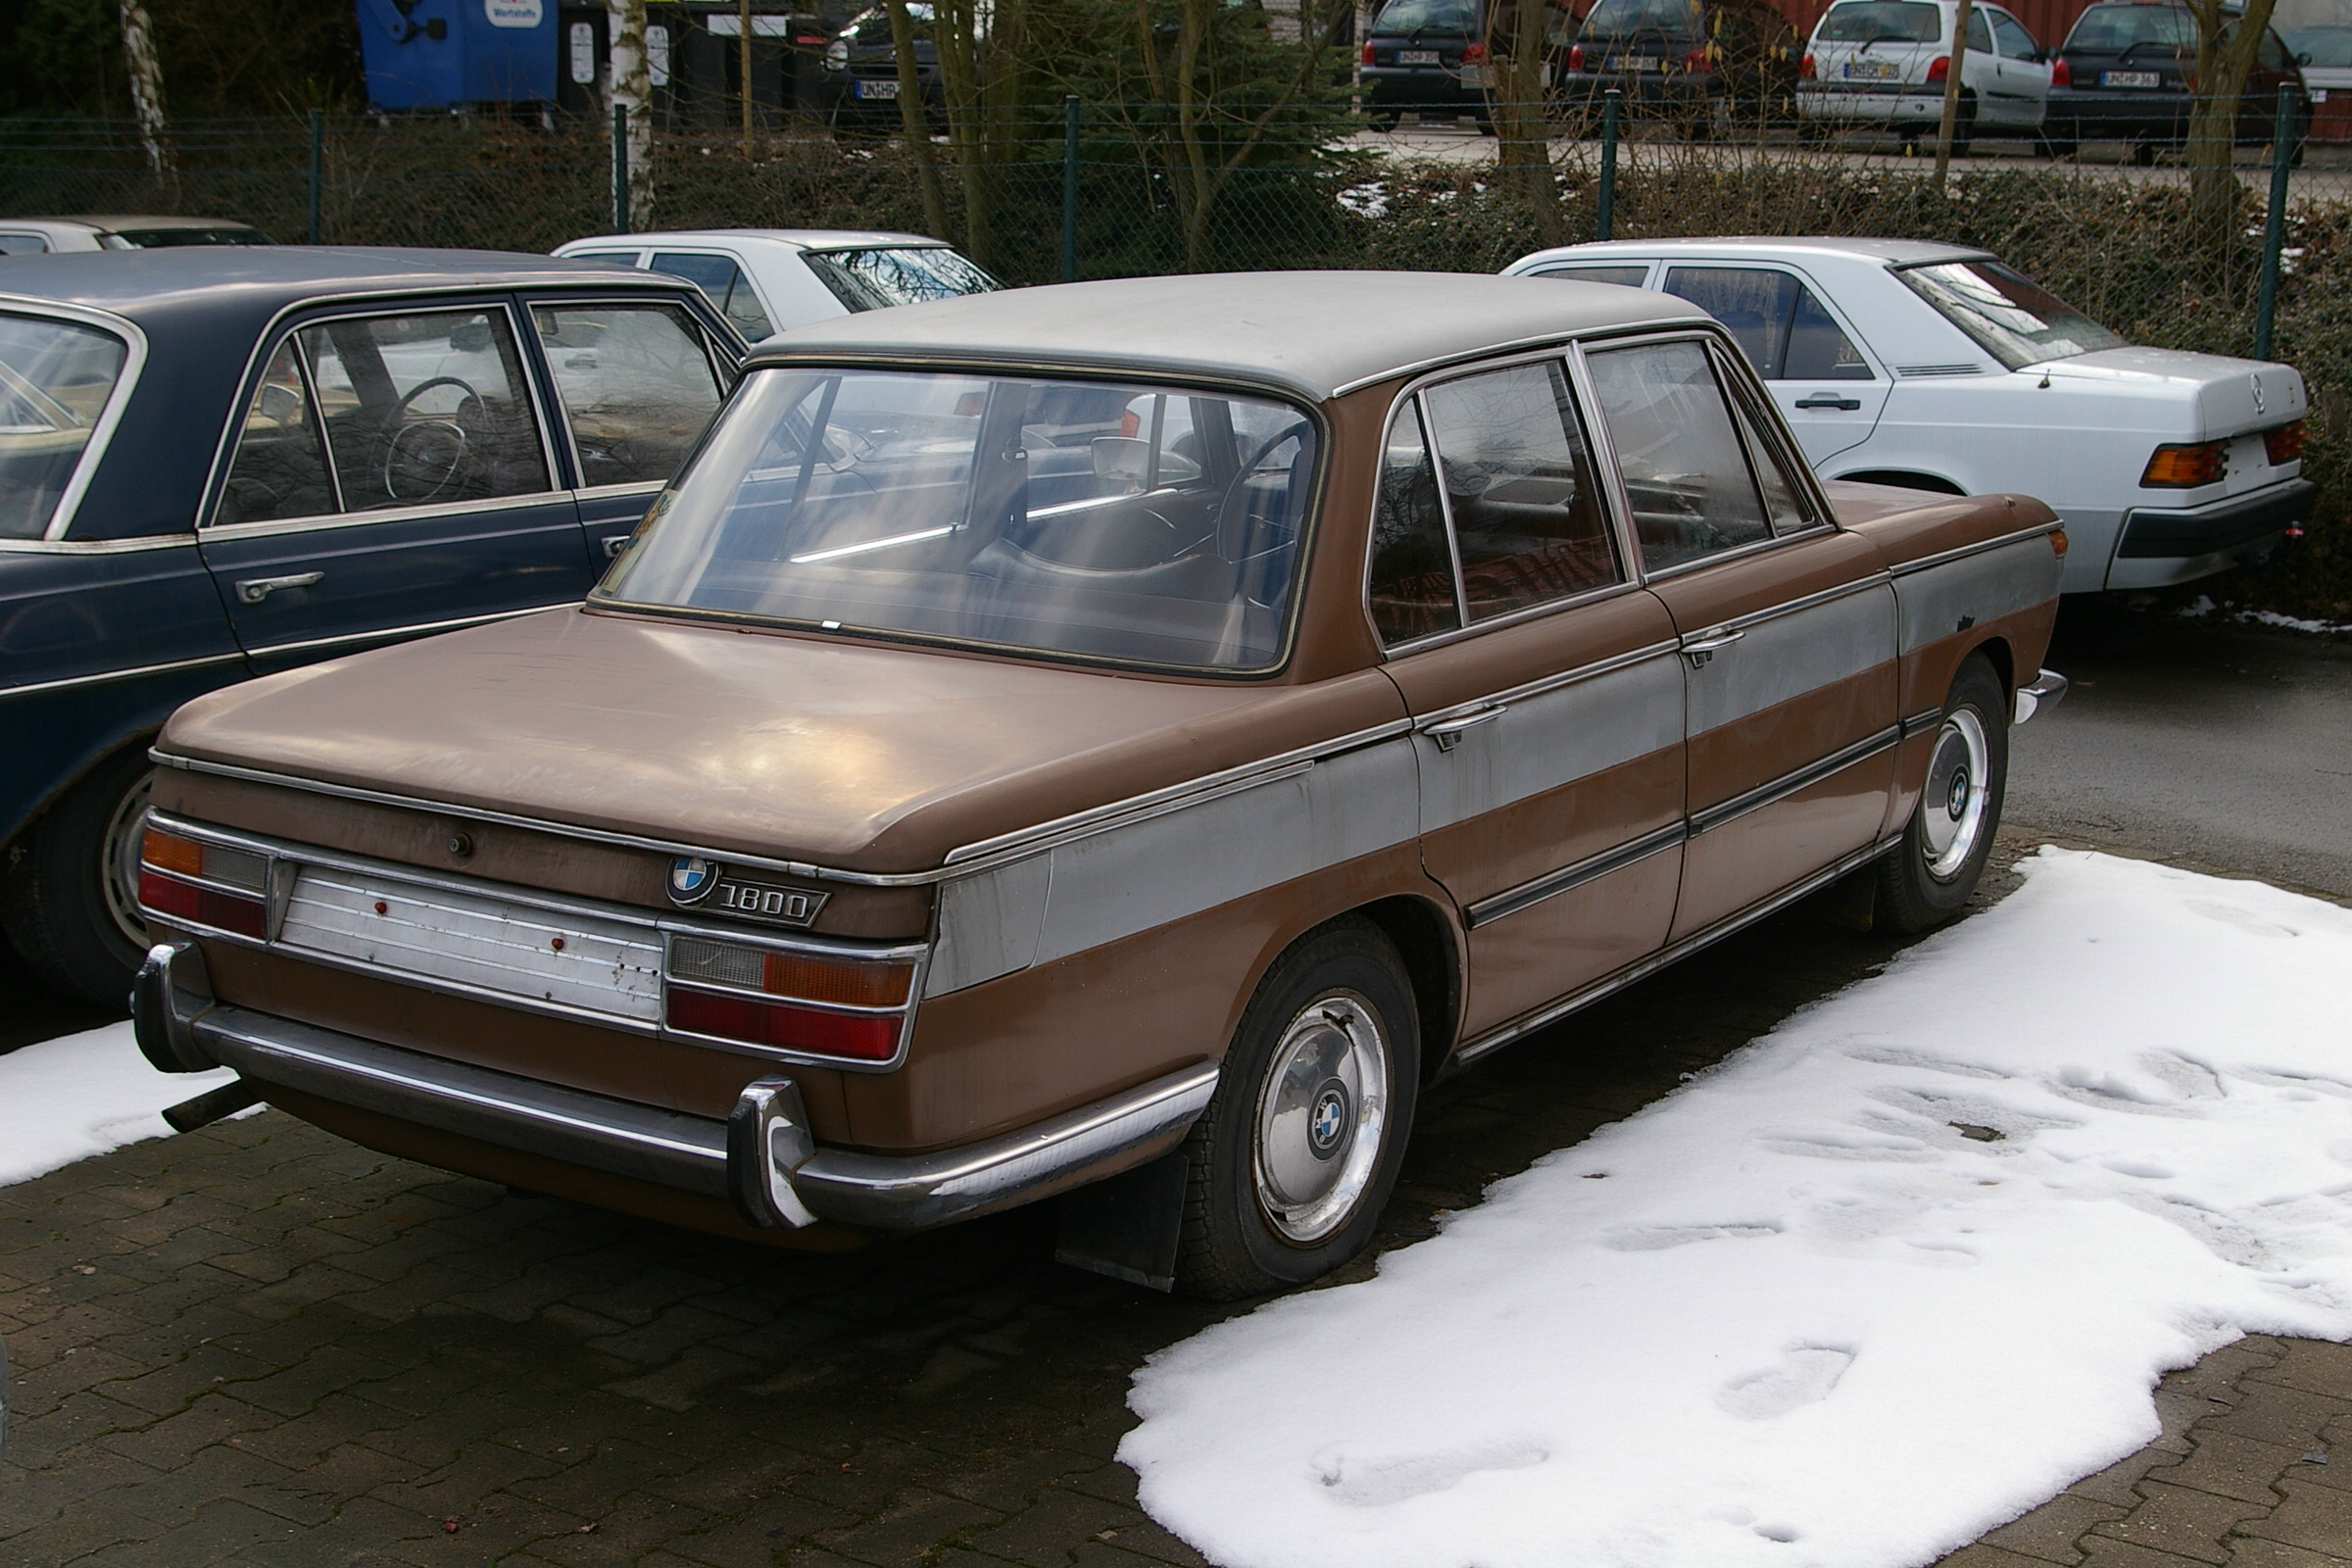 File:BMW-1800.jpg